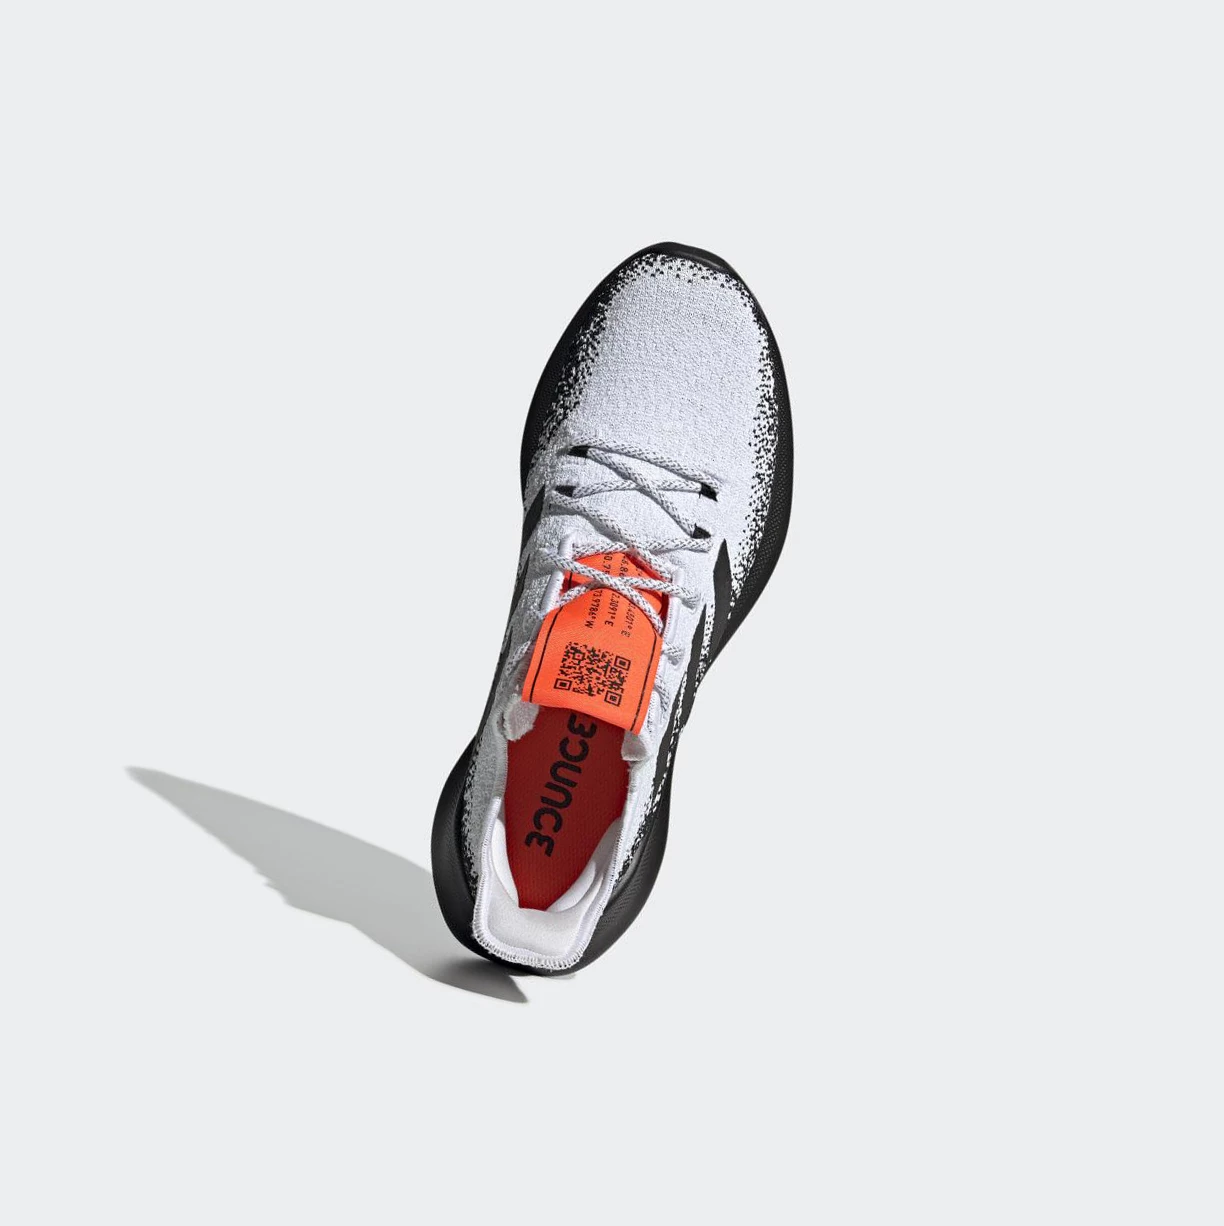 Bezecke Topanky Adidas Sensebounce+ Panske Biele | 798SKXPYWJT